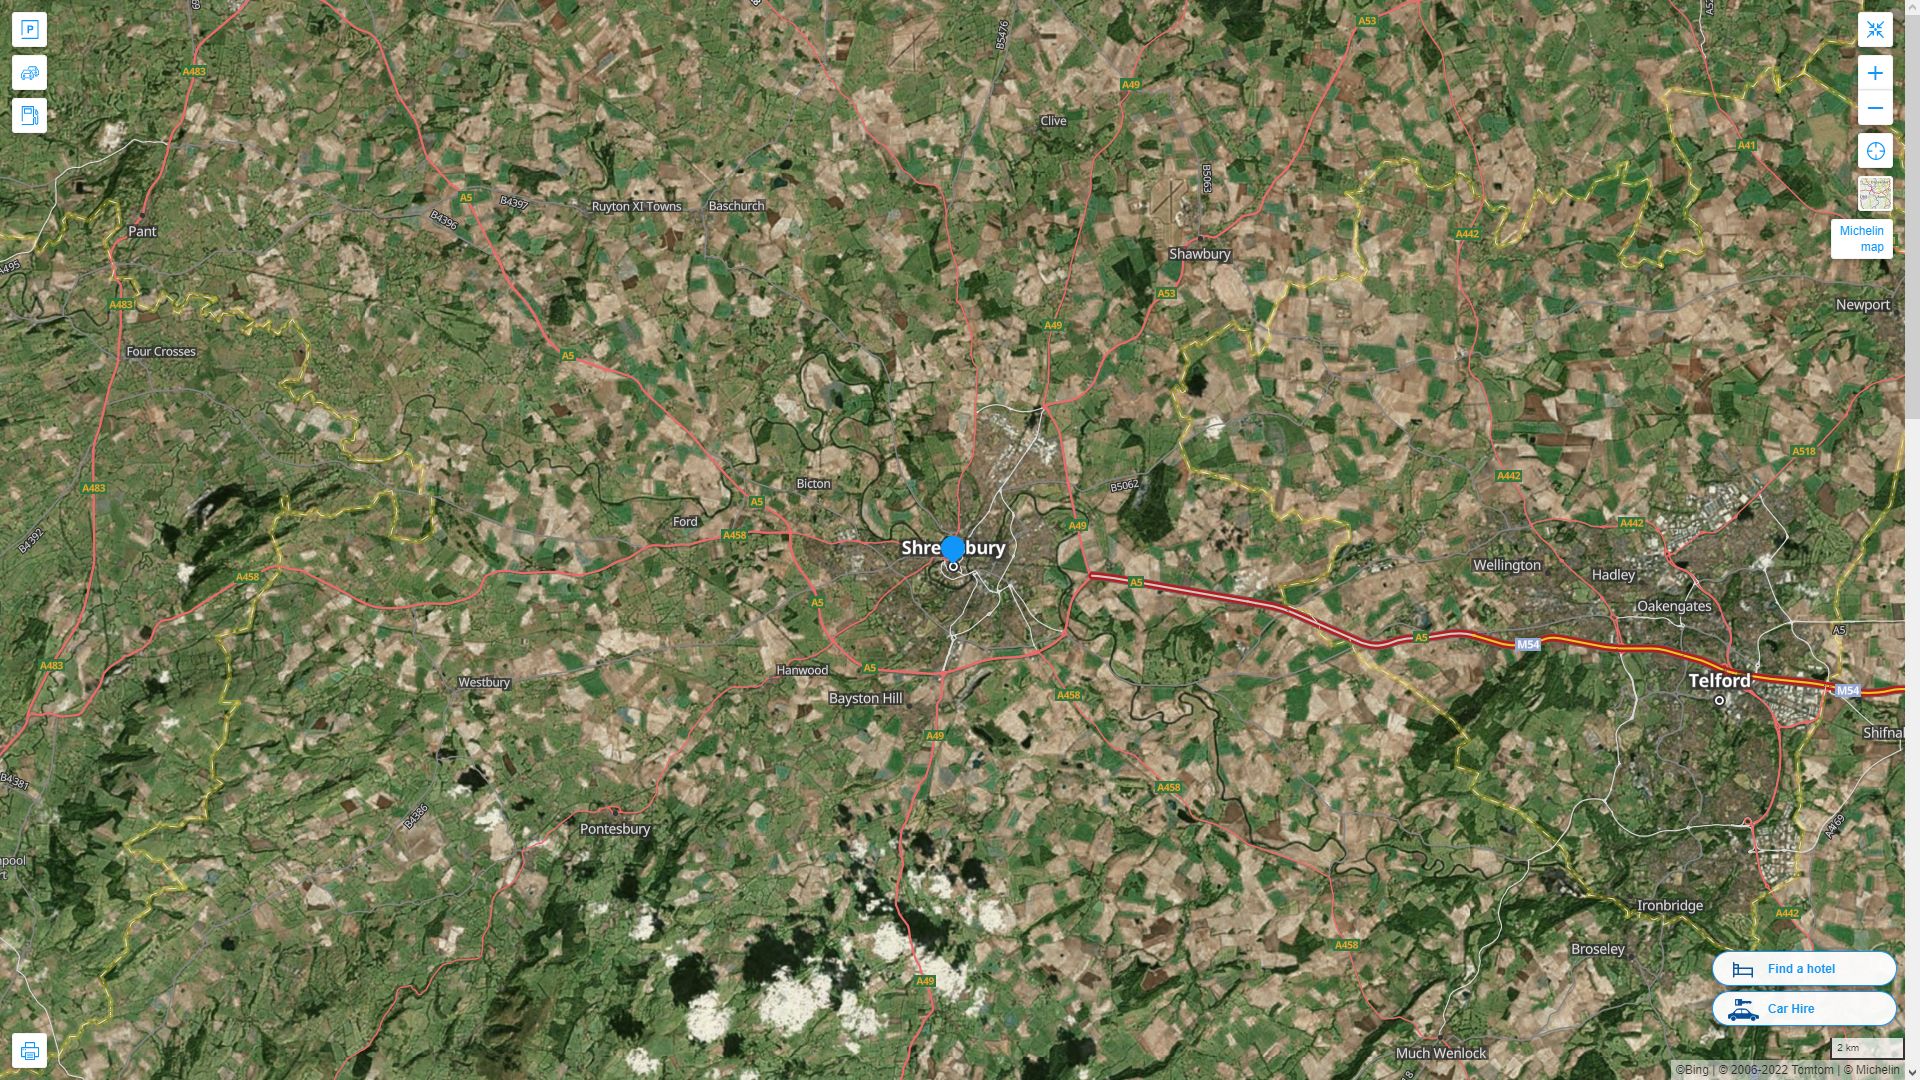 Shrewsbury Royaume Uni Autoroute et carte routiere avec vue satellite